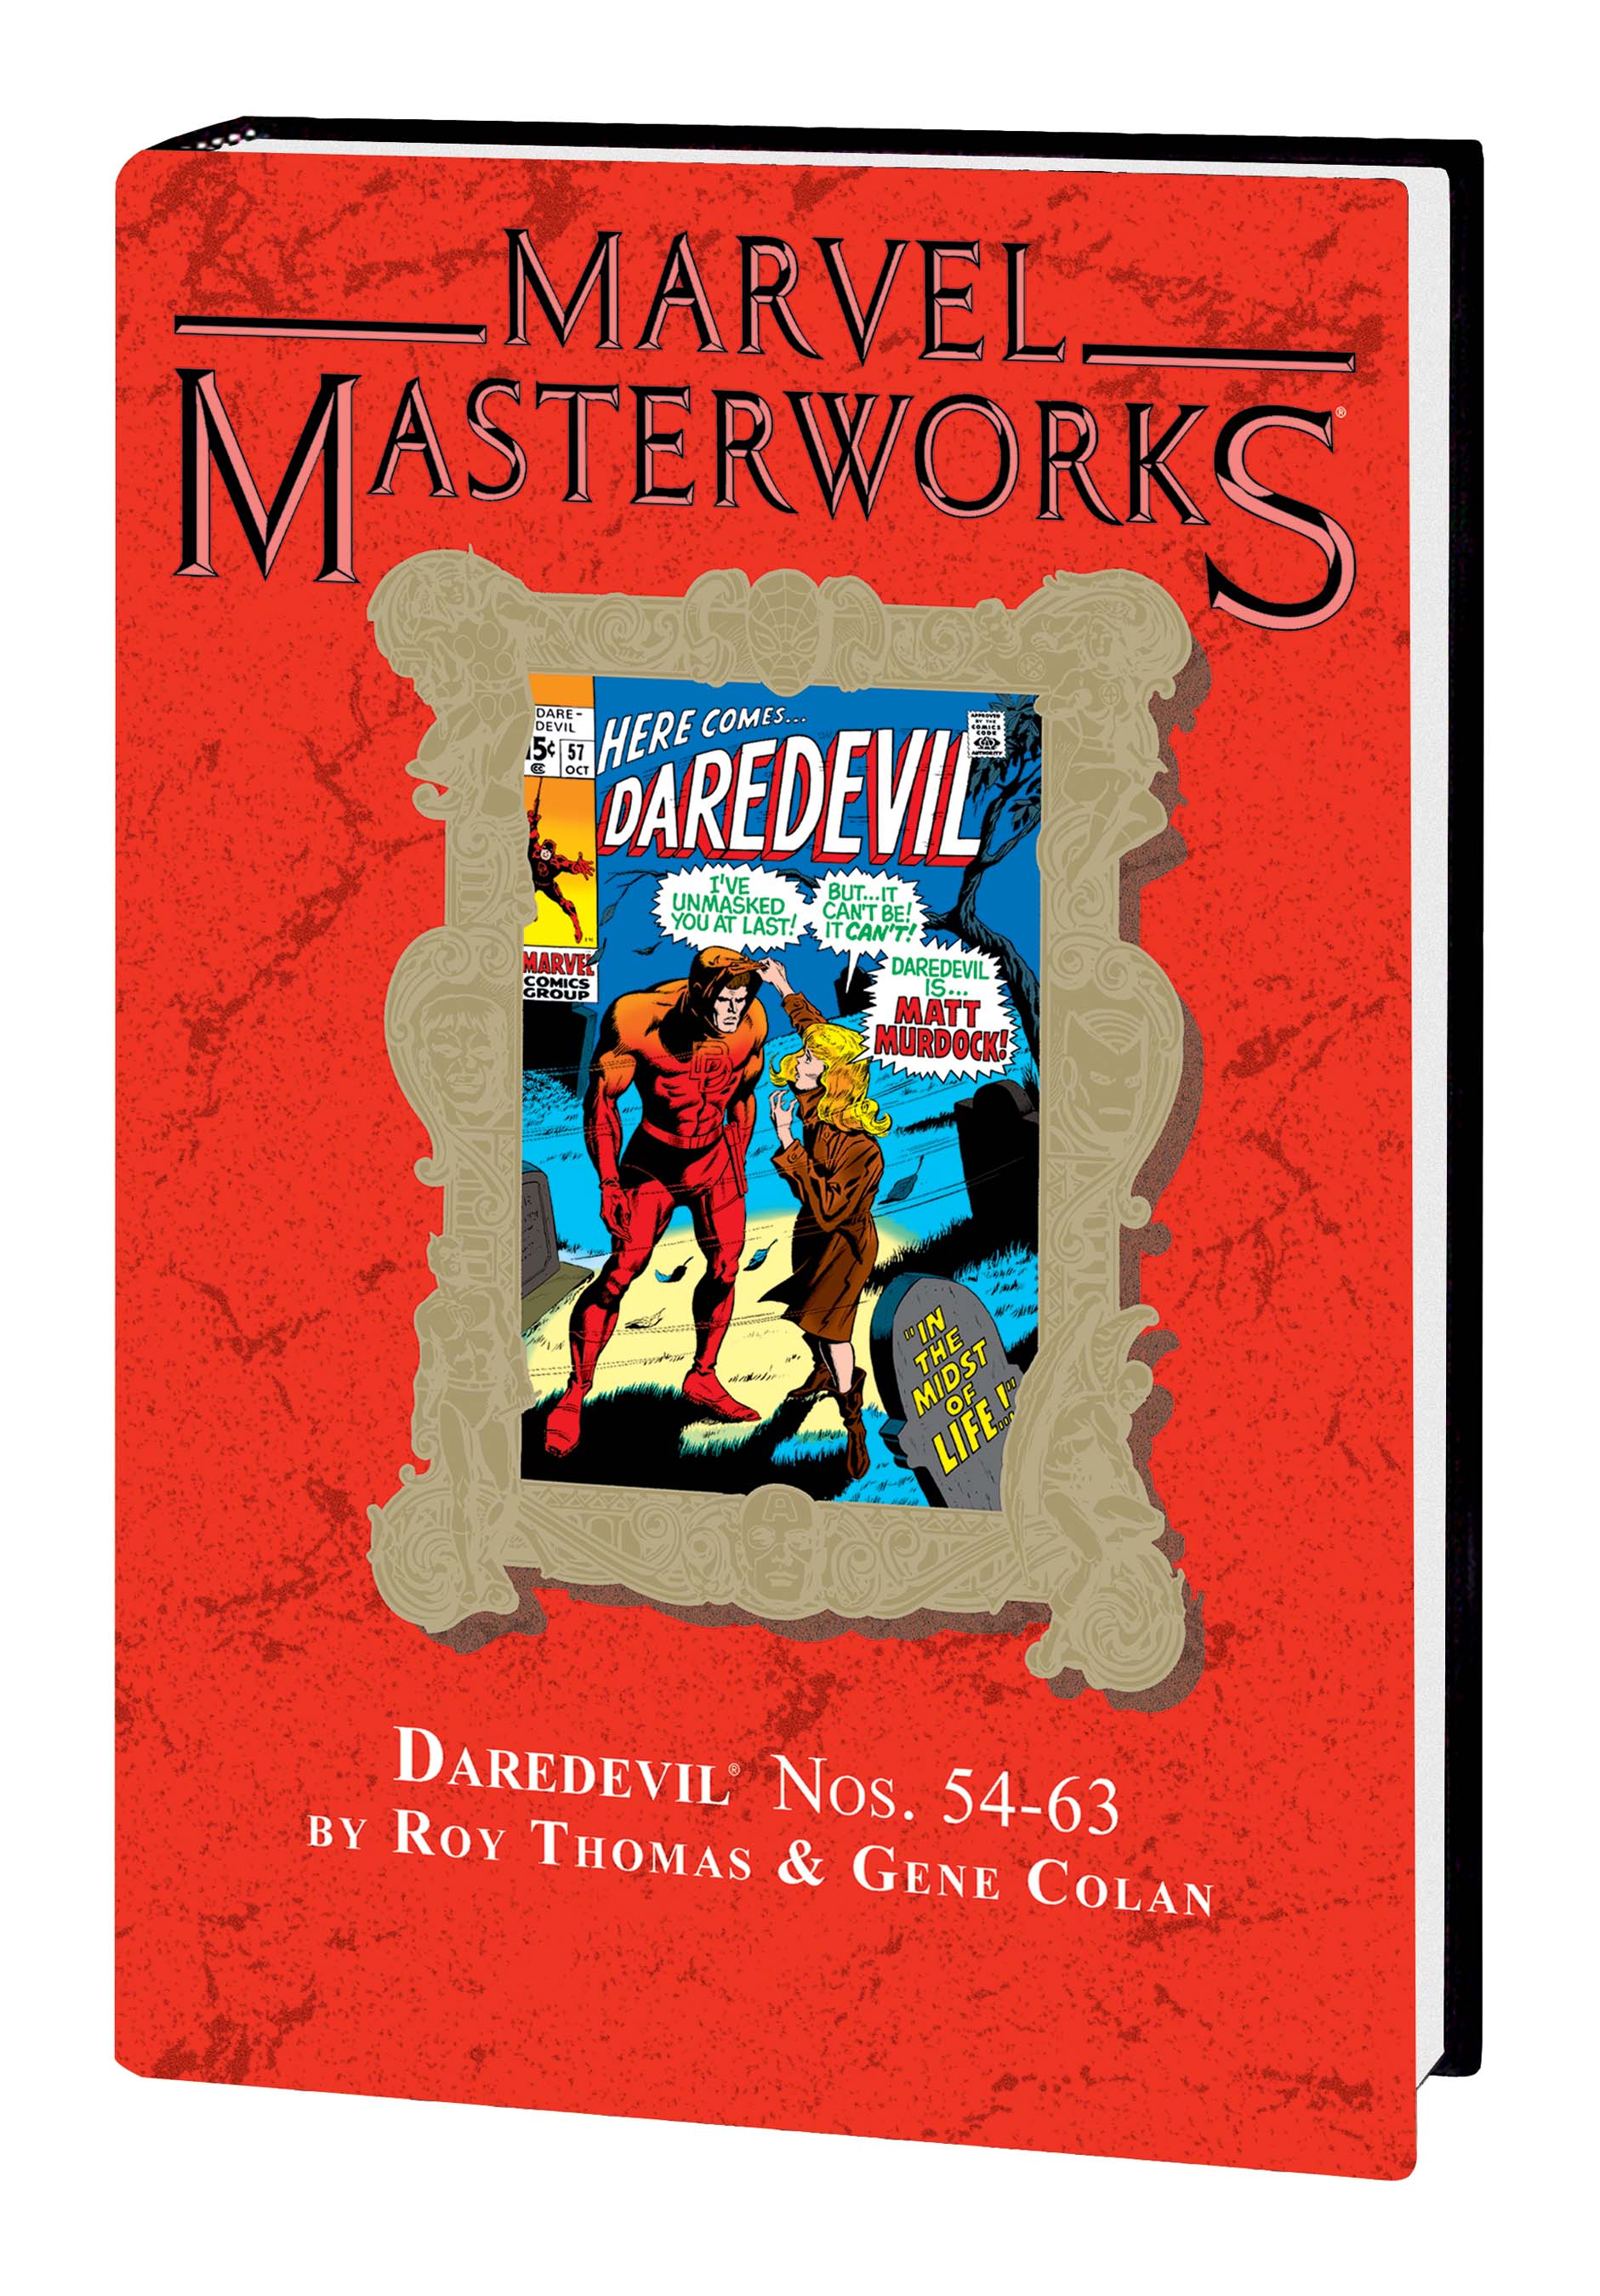 MARVEL MASTERWORKS: DAREDEVIL VOL. 6 HC (DM Variant) (Hardcover)